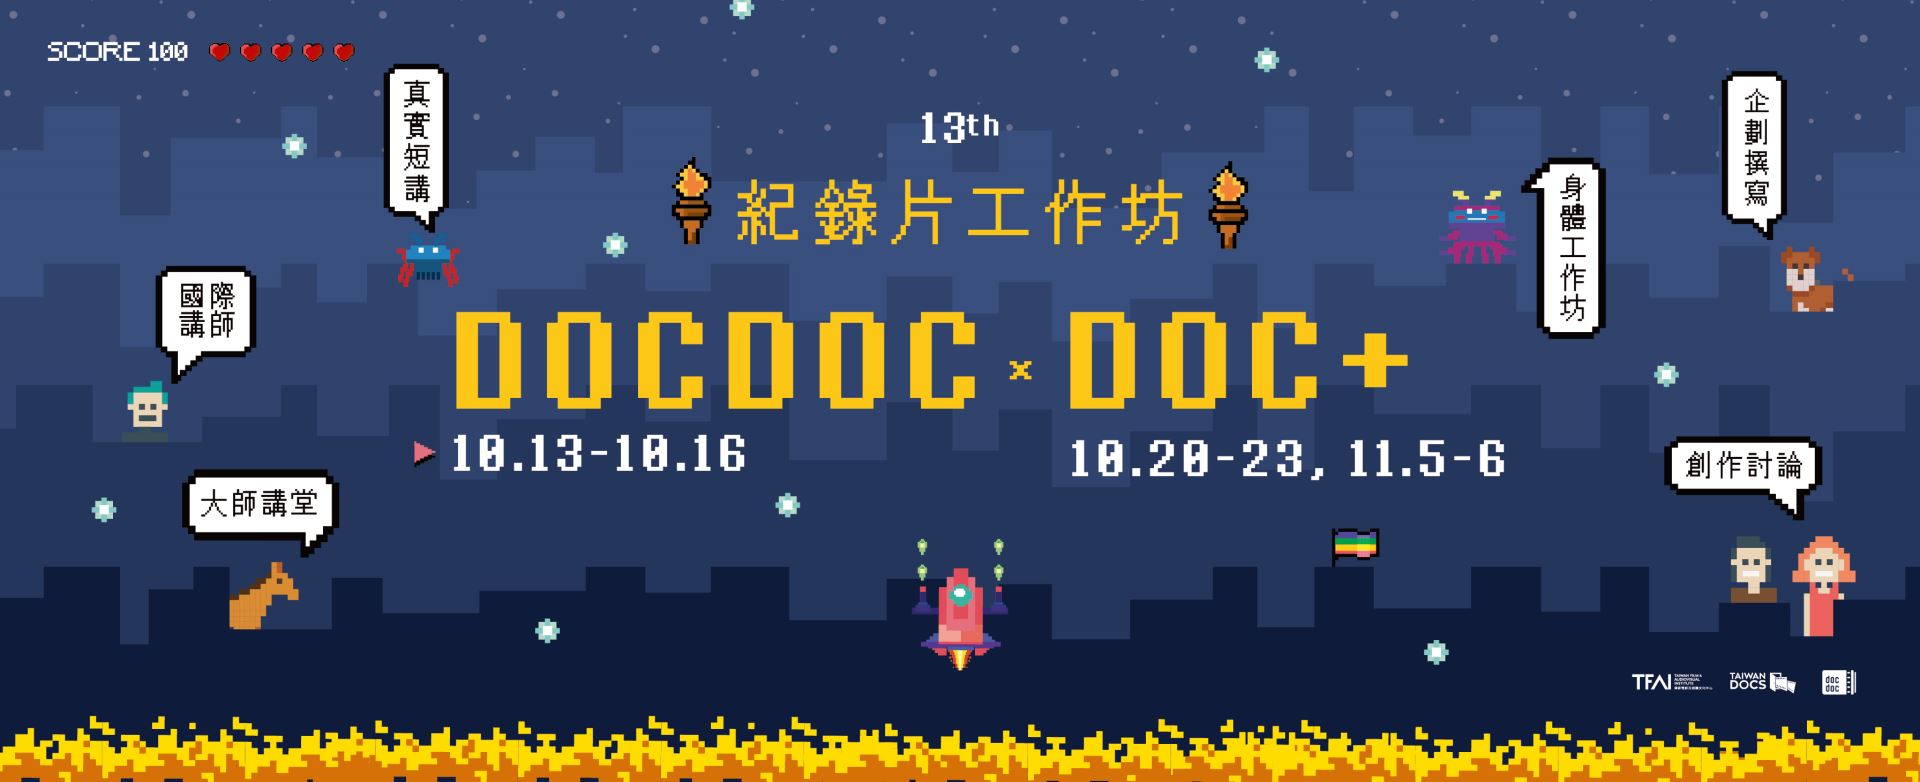 2022 DOC DOC X DOC+紀錄片工作坊